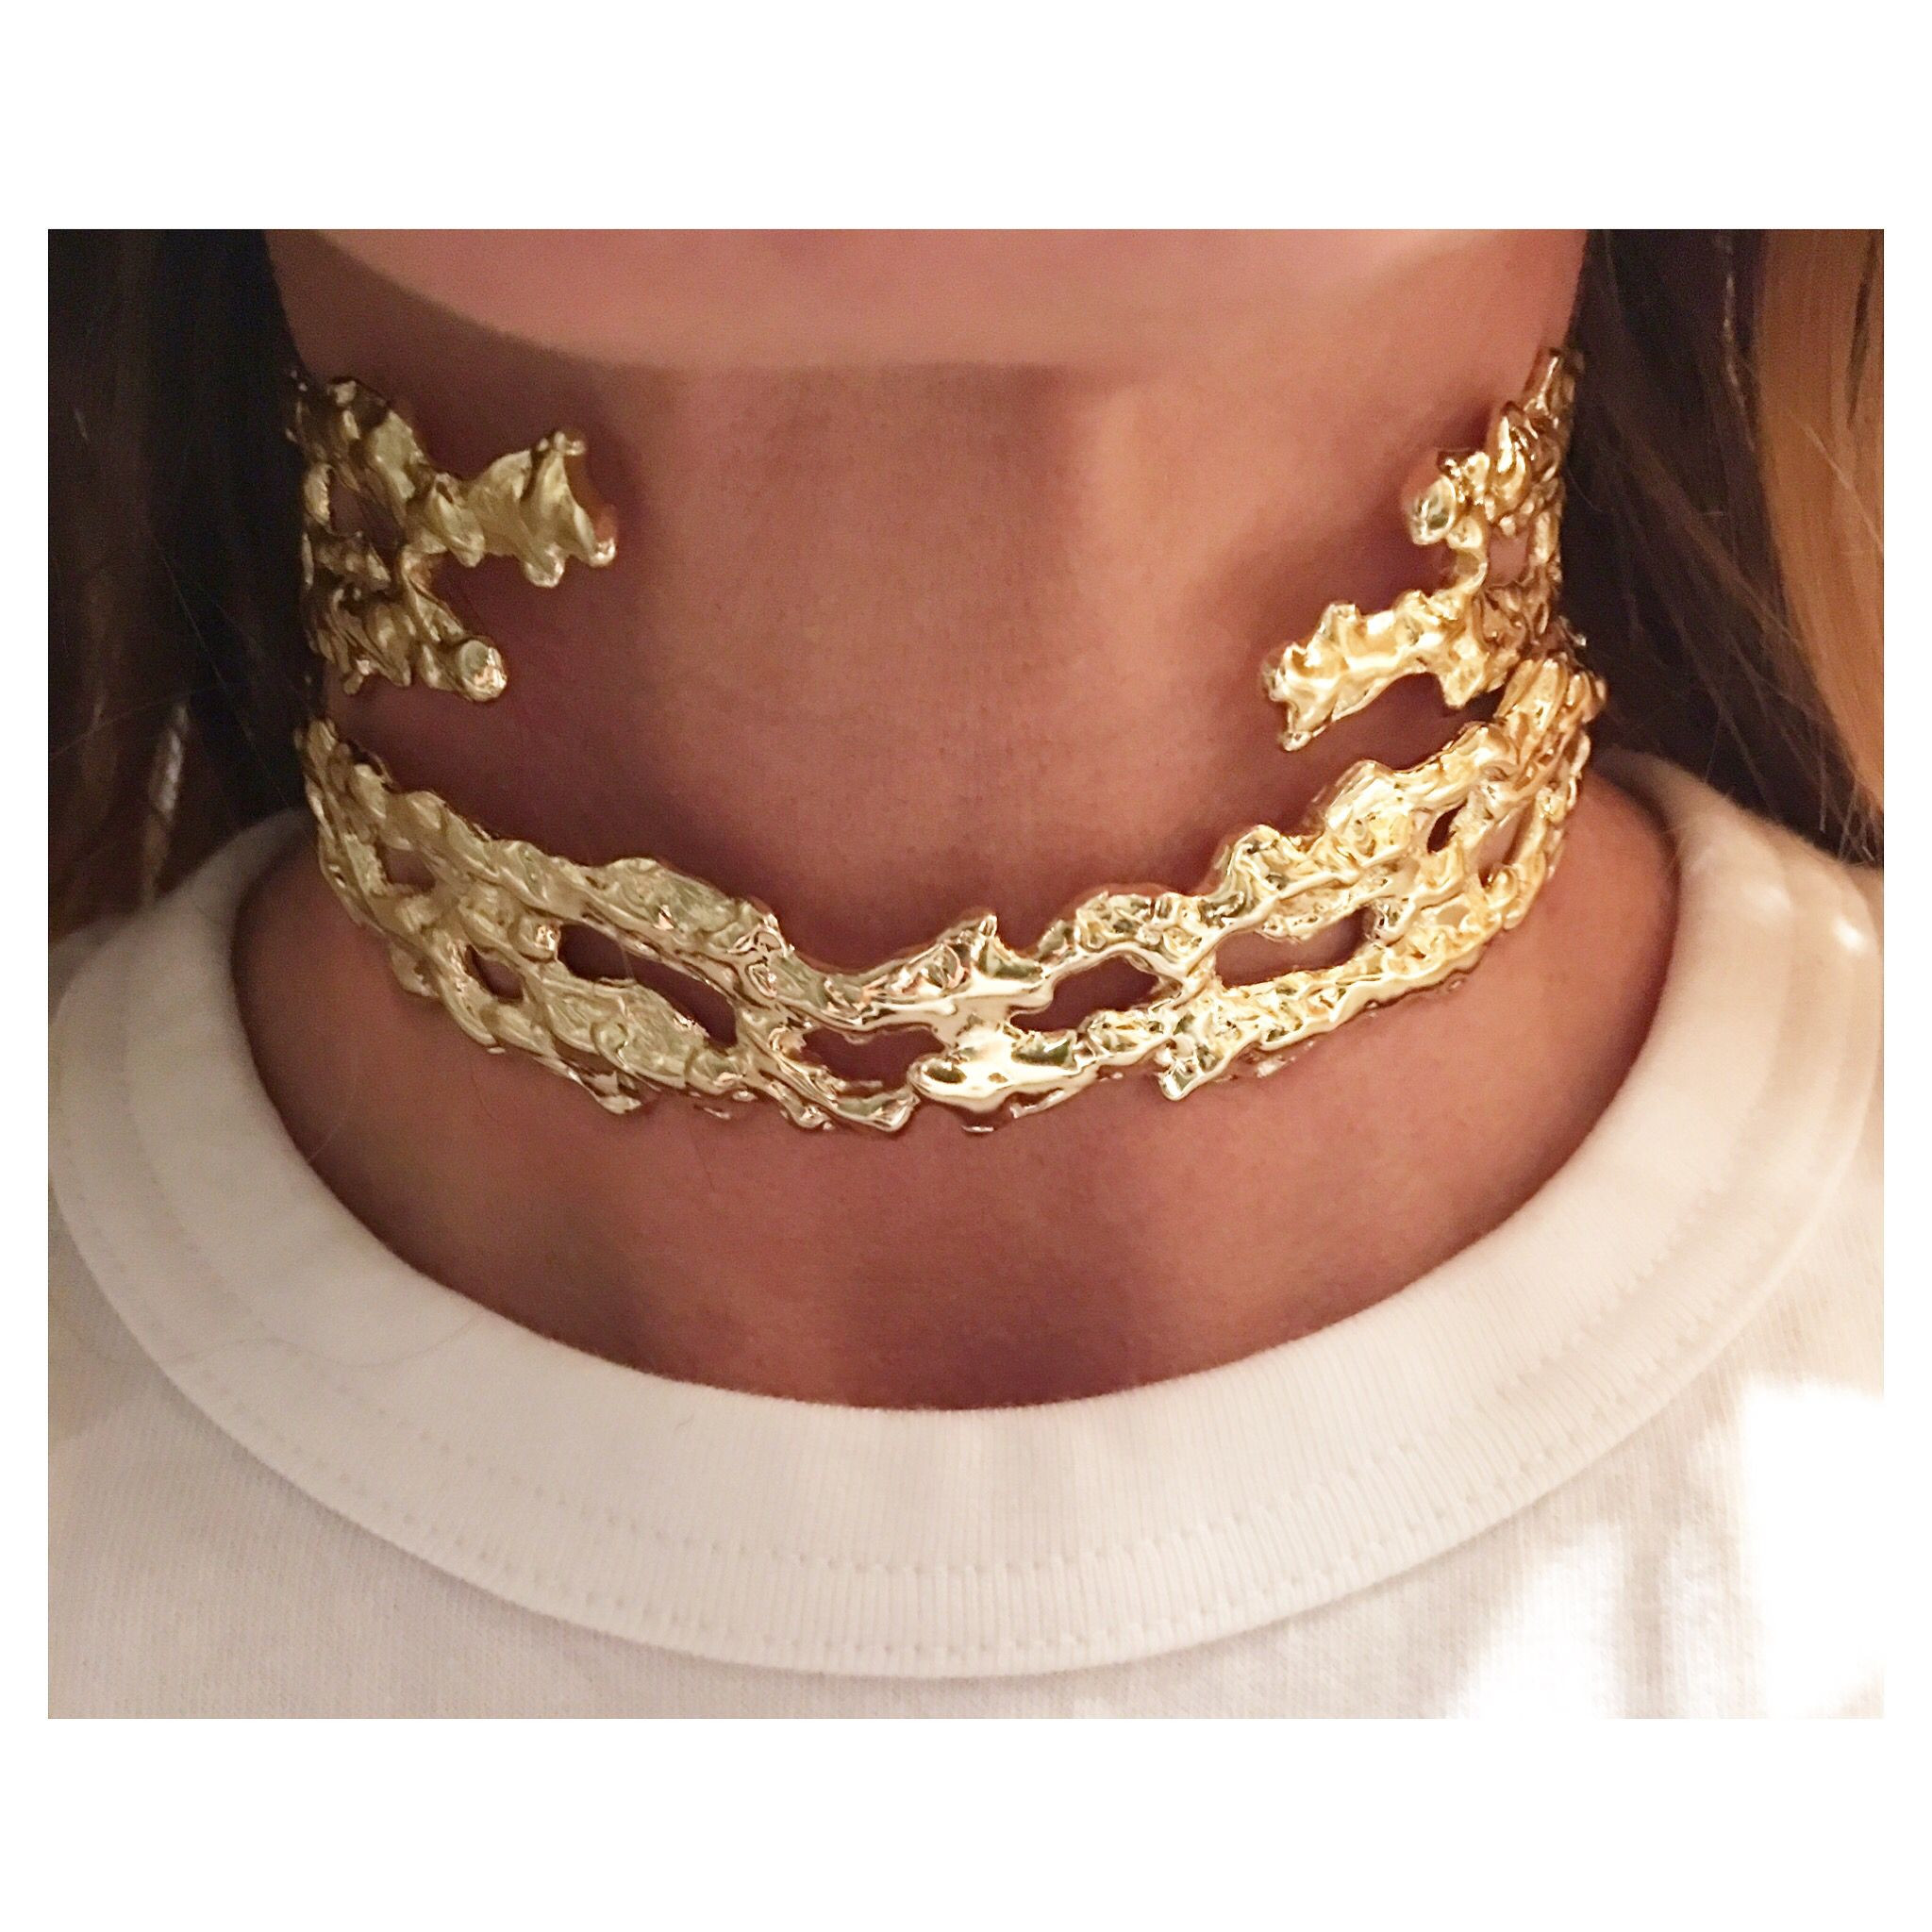 Body Jewelry Prom
 the gold choker …